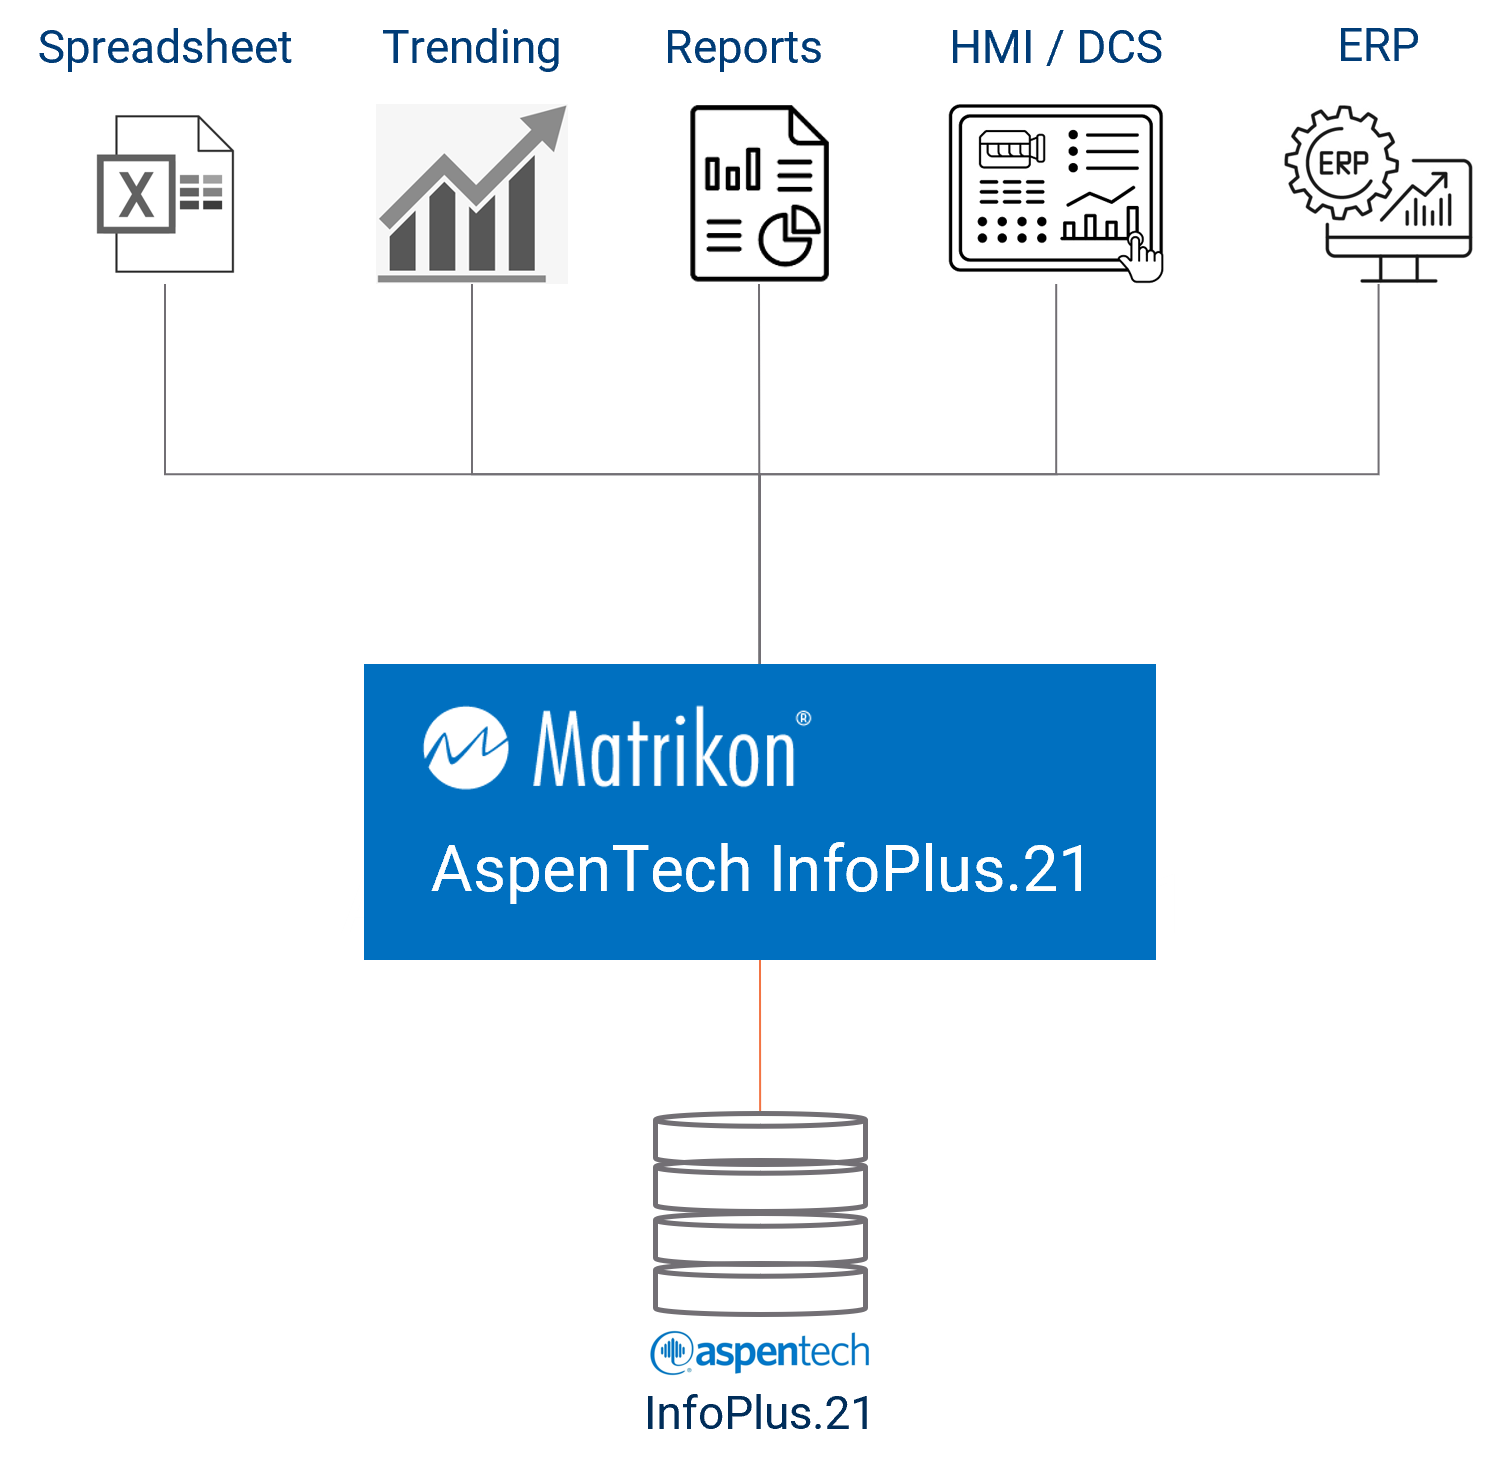 Matrikon OPC Server for AspenTech InfoPlus.21